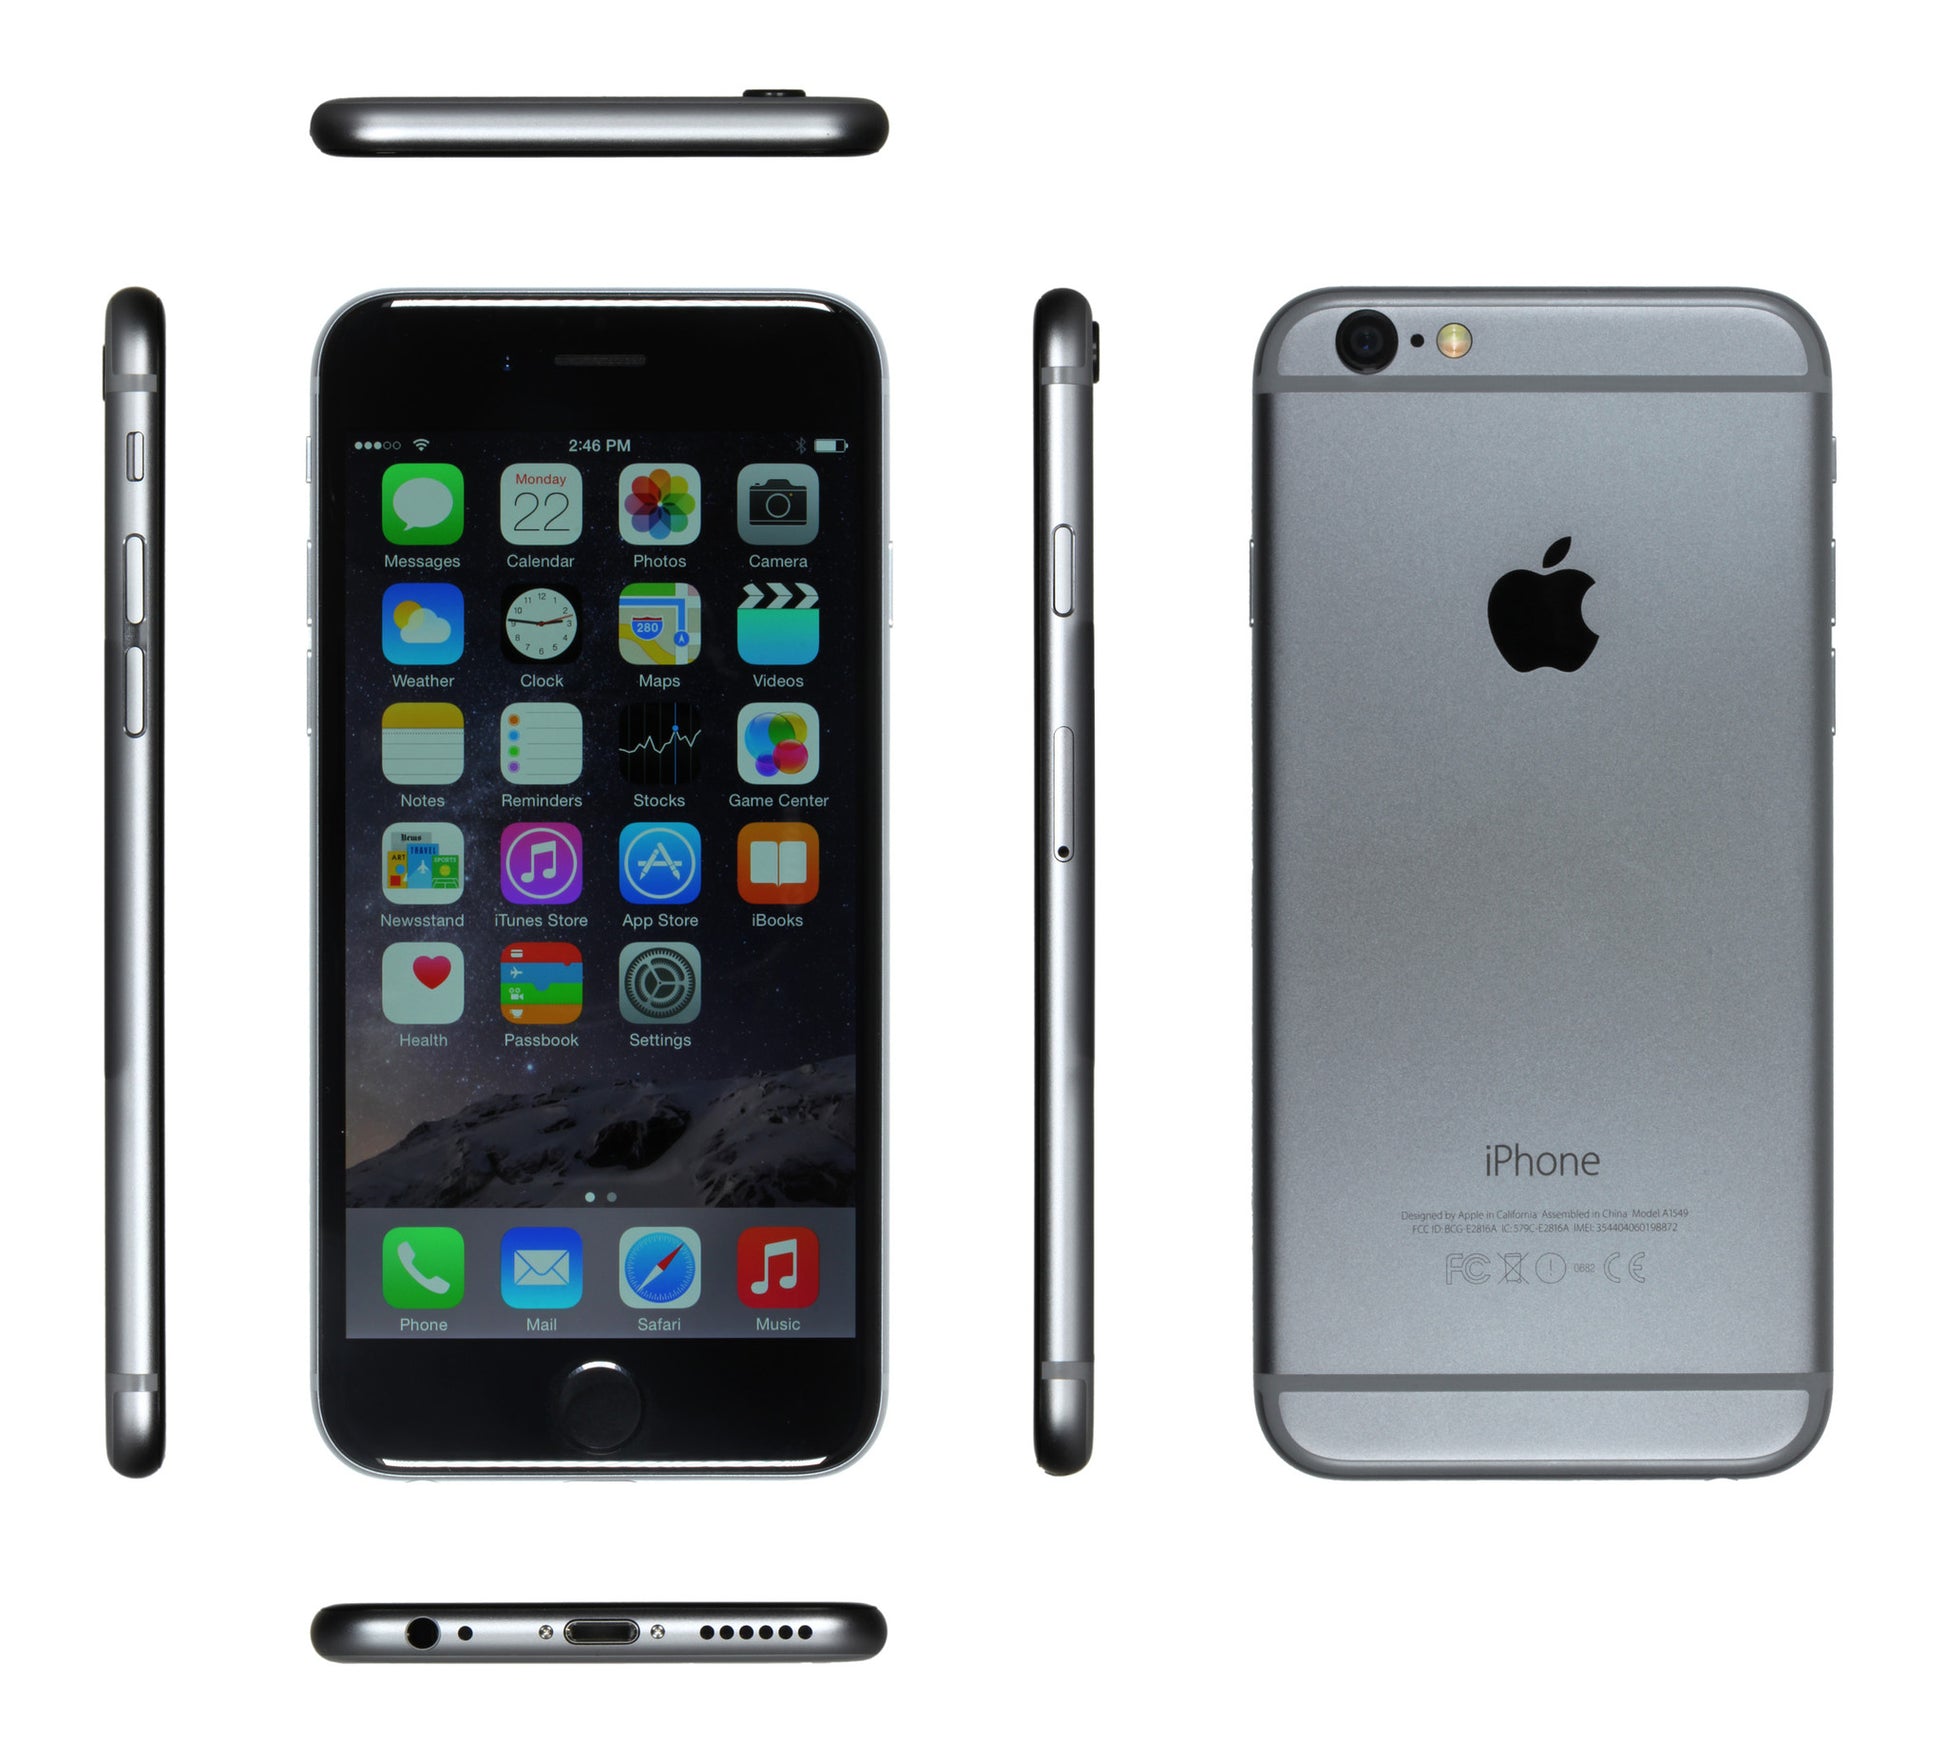 Apple iPhone 6 16GB A1549 MG4N2LL/A Space Gray LTE AT&T Factory Unlocked Grade B - worldtradesolution.com
 - 4